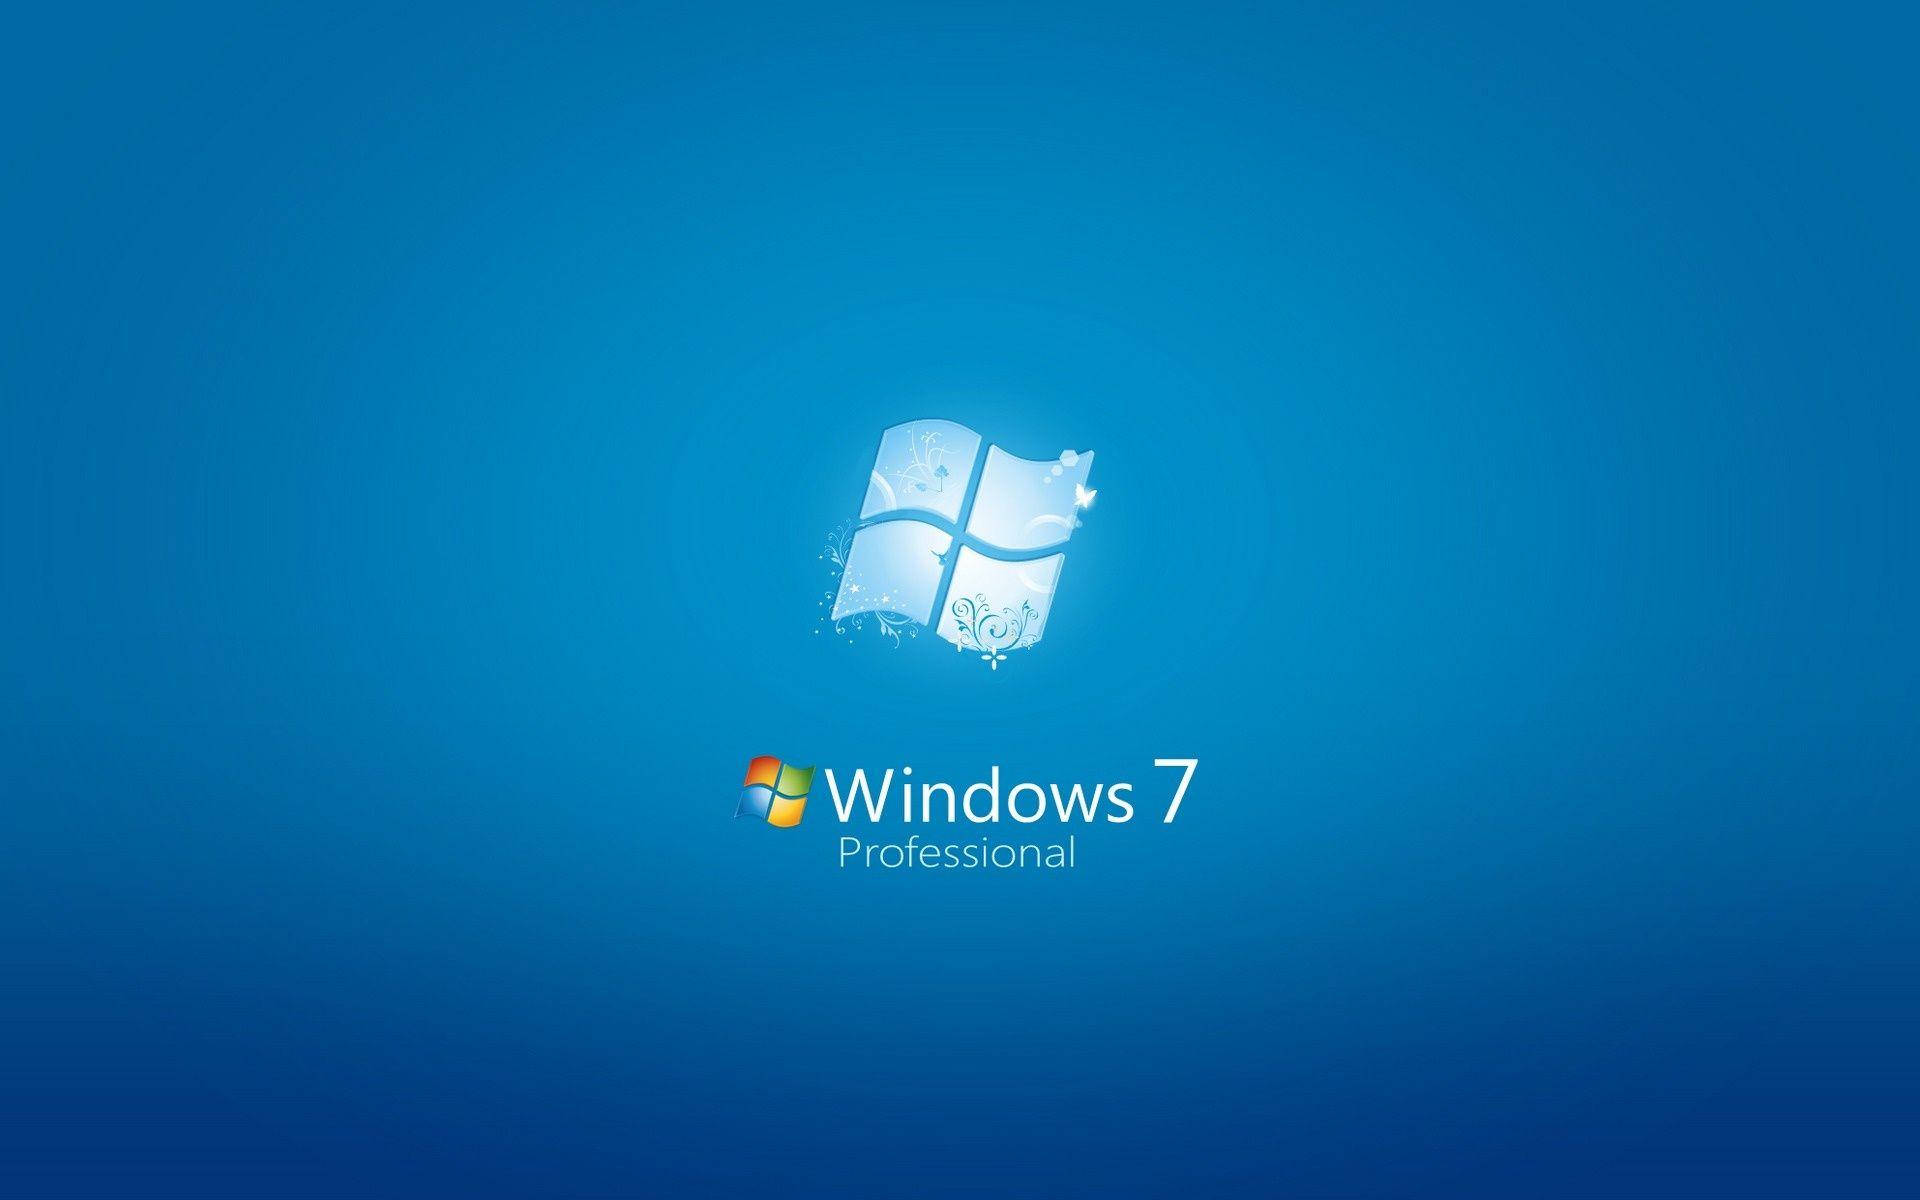 Fondos Windows 7 Professional wallpaper